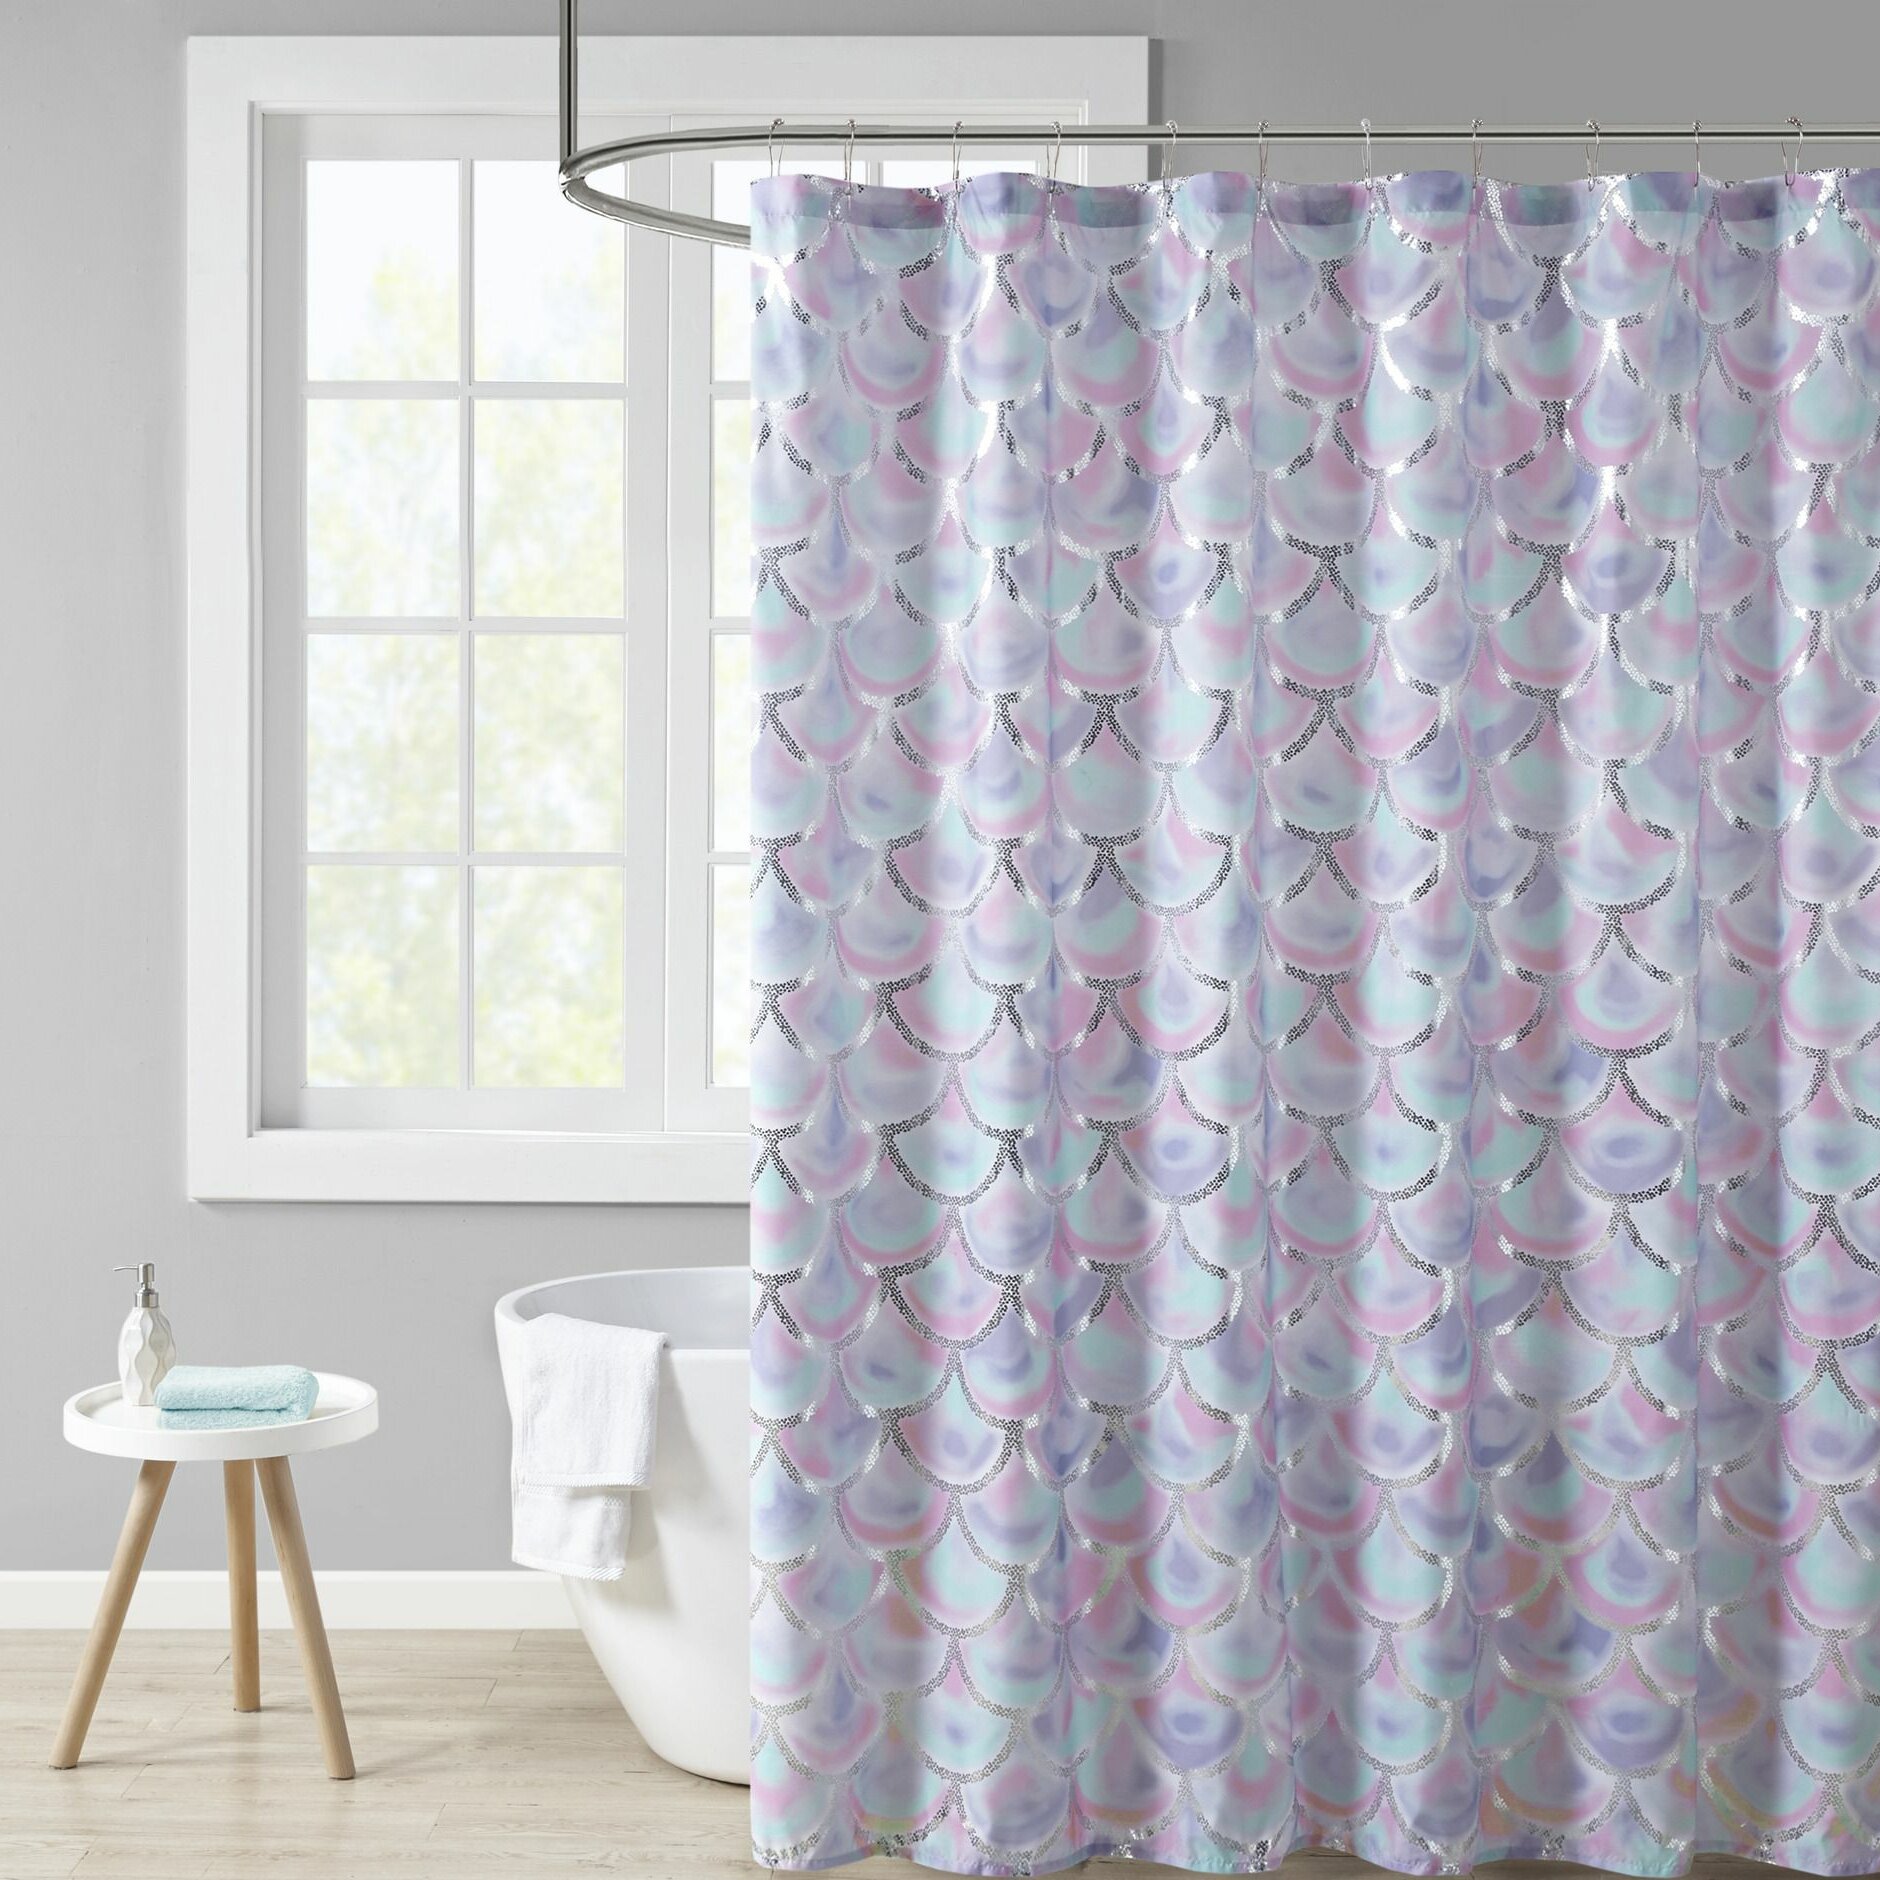 Beautiful Colorful Fish Scale Mermaid Tail Bathroom Fabric Shower Curtain Set 